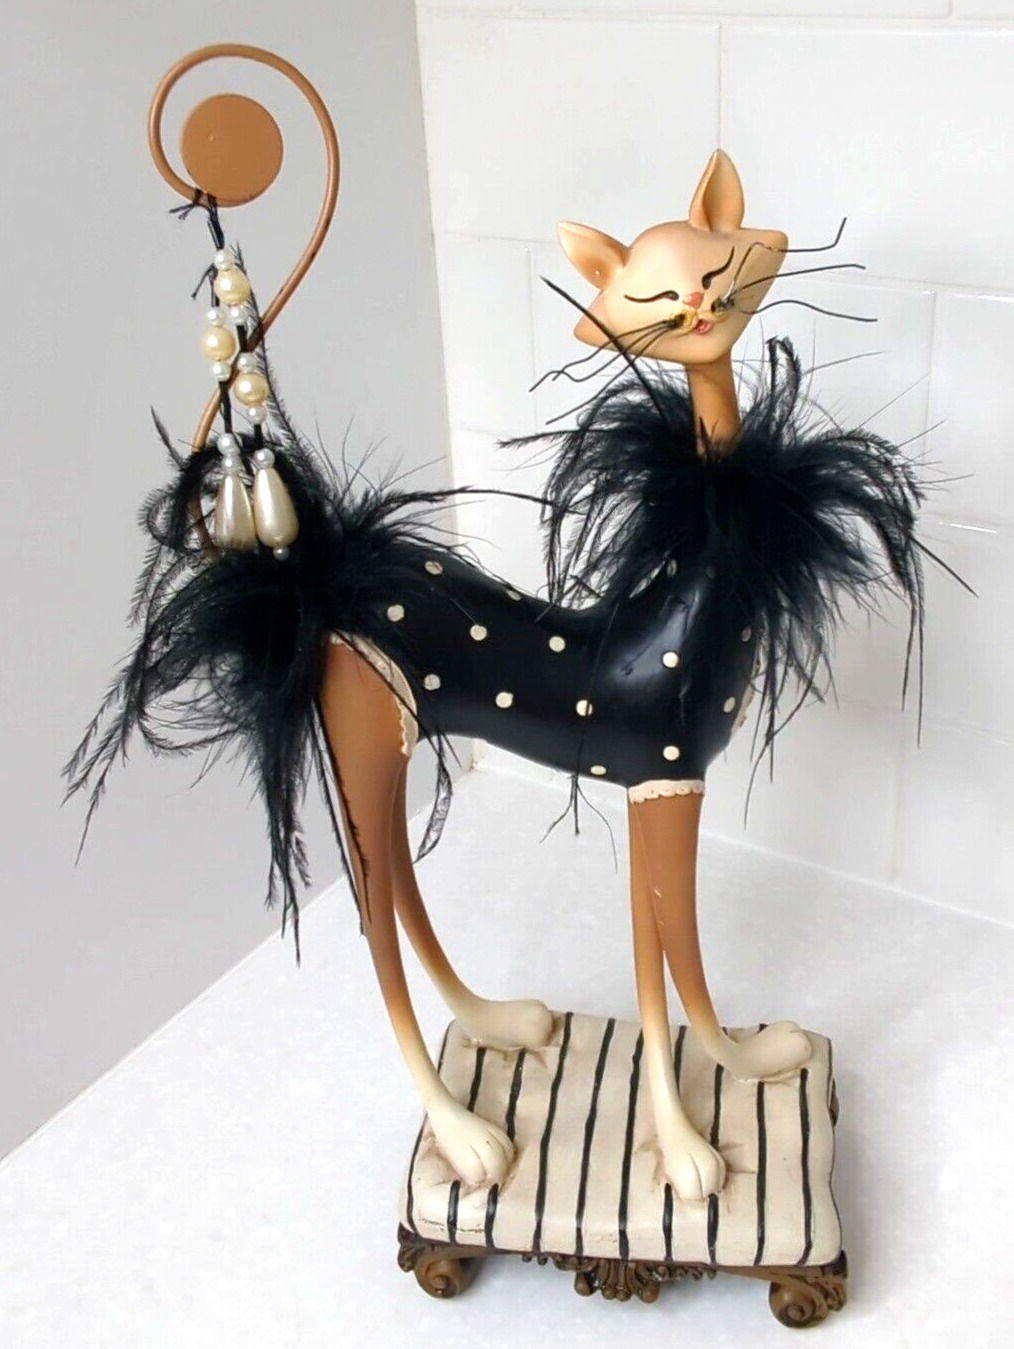 Enesco Fanciful Felines Cat Figurine Parisian Maid Feathers Polka Dots Scarce